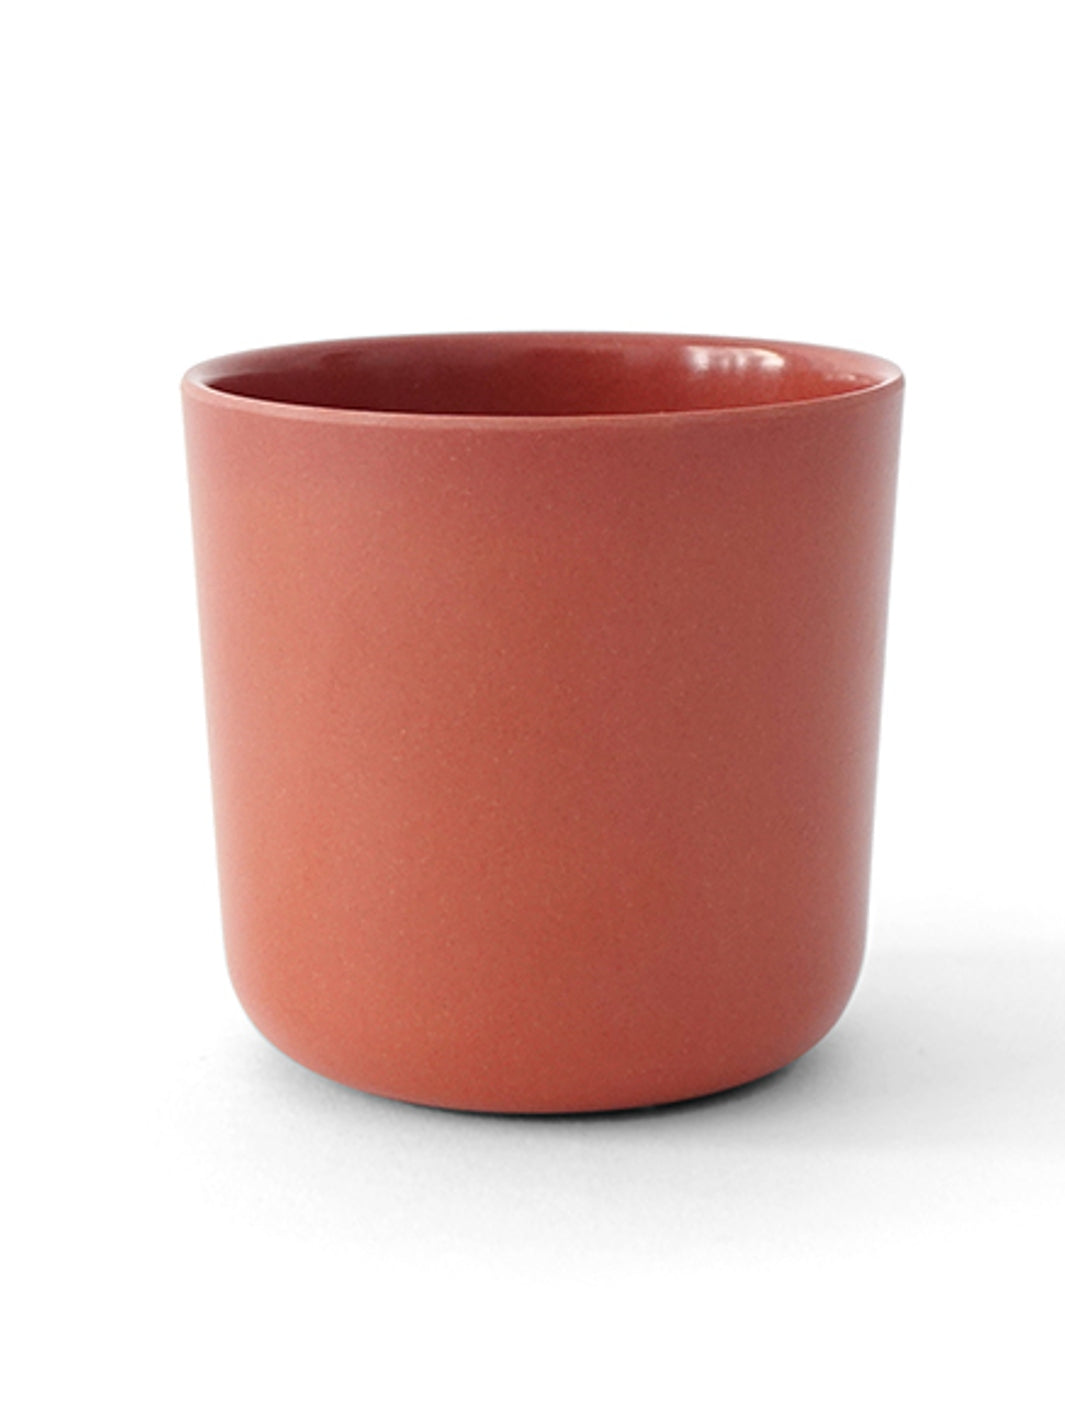 EKOBO Bambino Small Cup Set (4 cups)